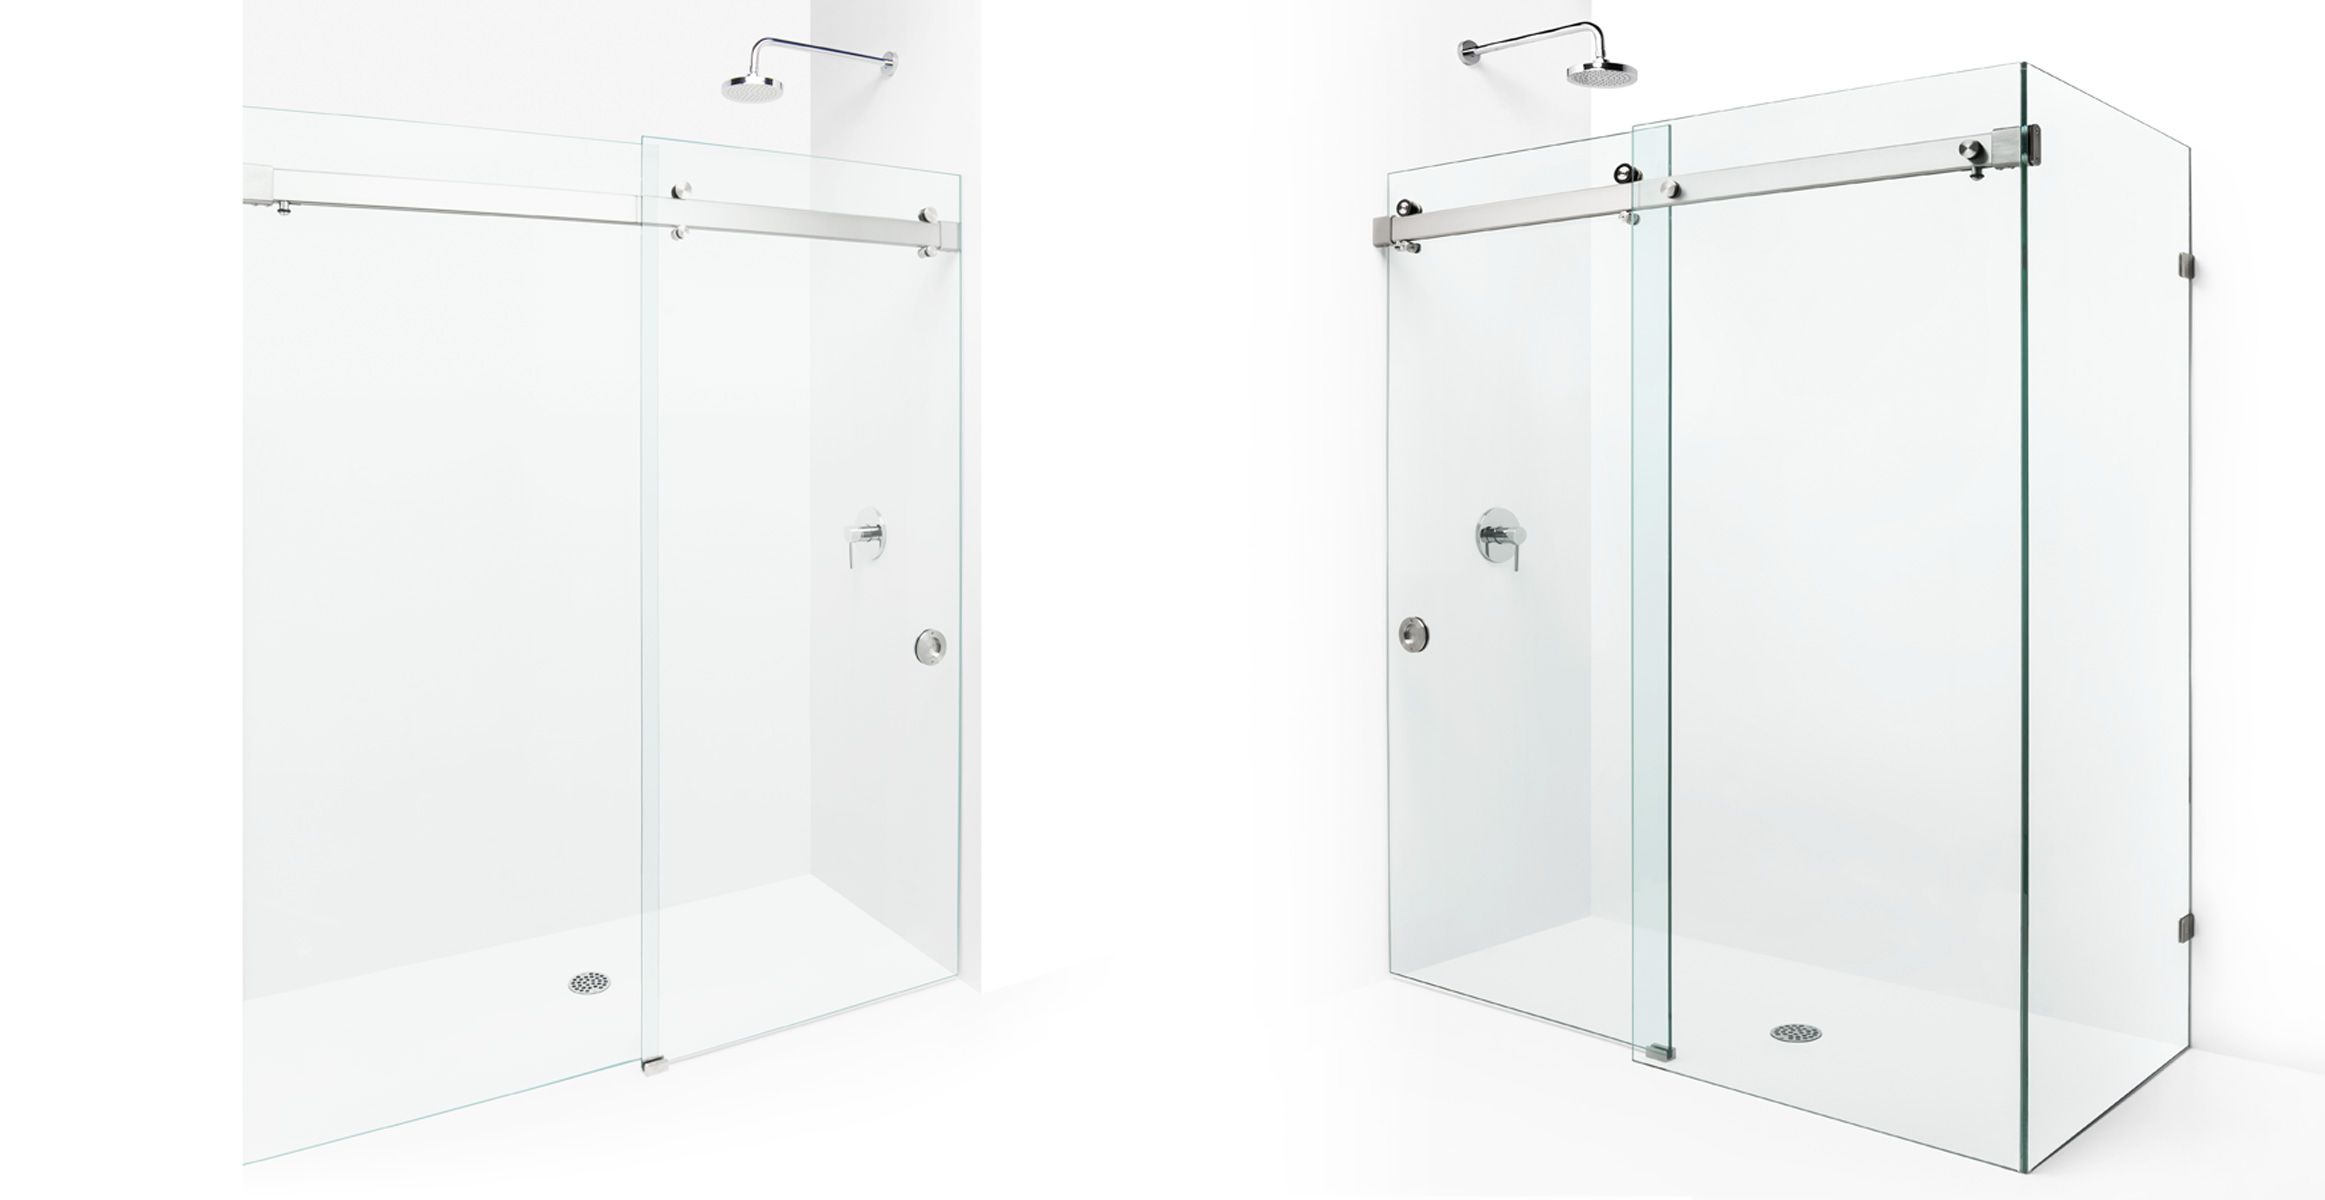 Frameless glass shower system in Brushed Stainless.